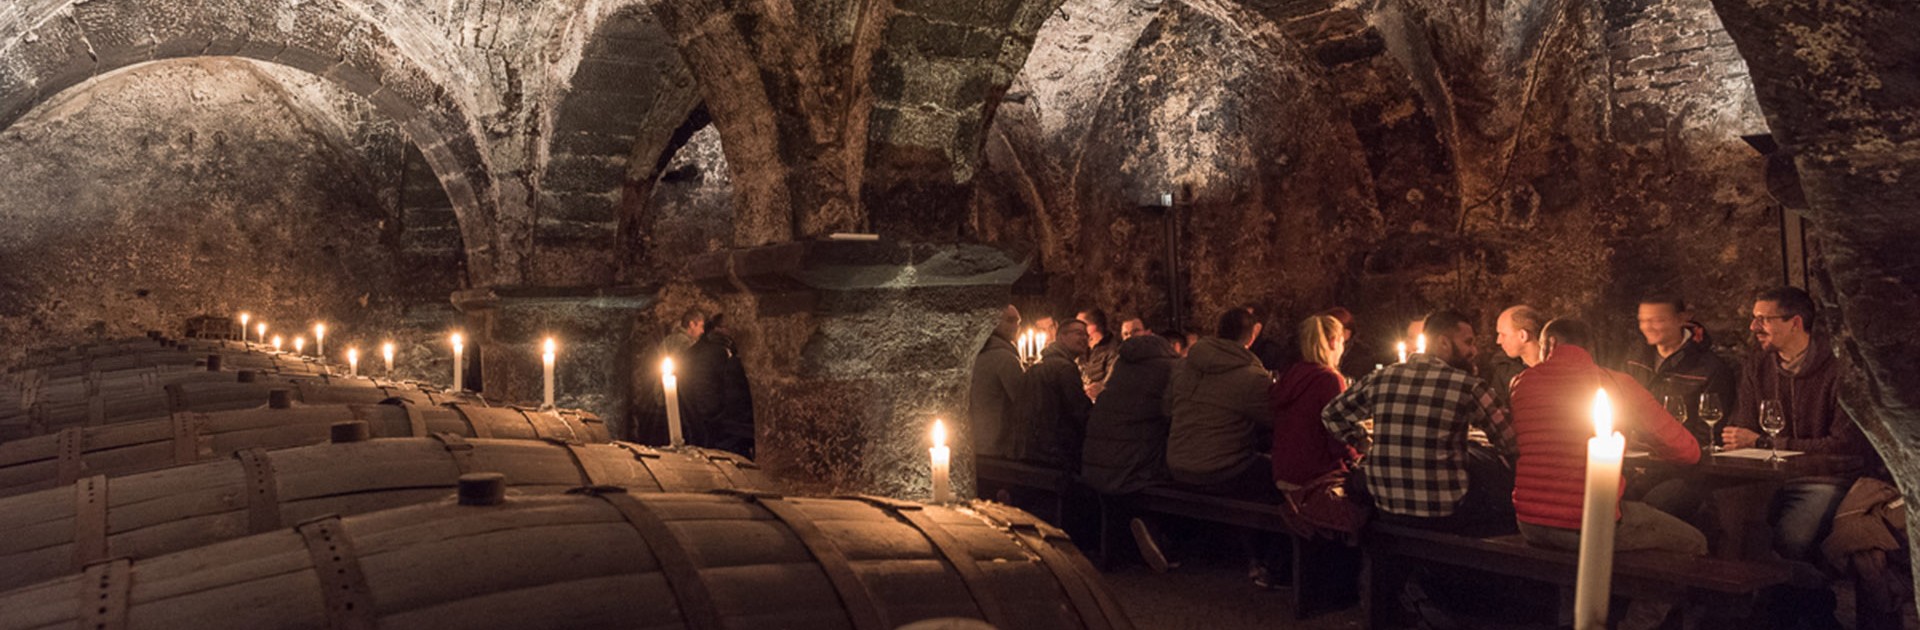 Wine tasting in Germany´s oldest wine cellar - © Vereinigte Hospitien